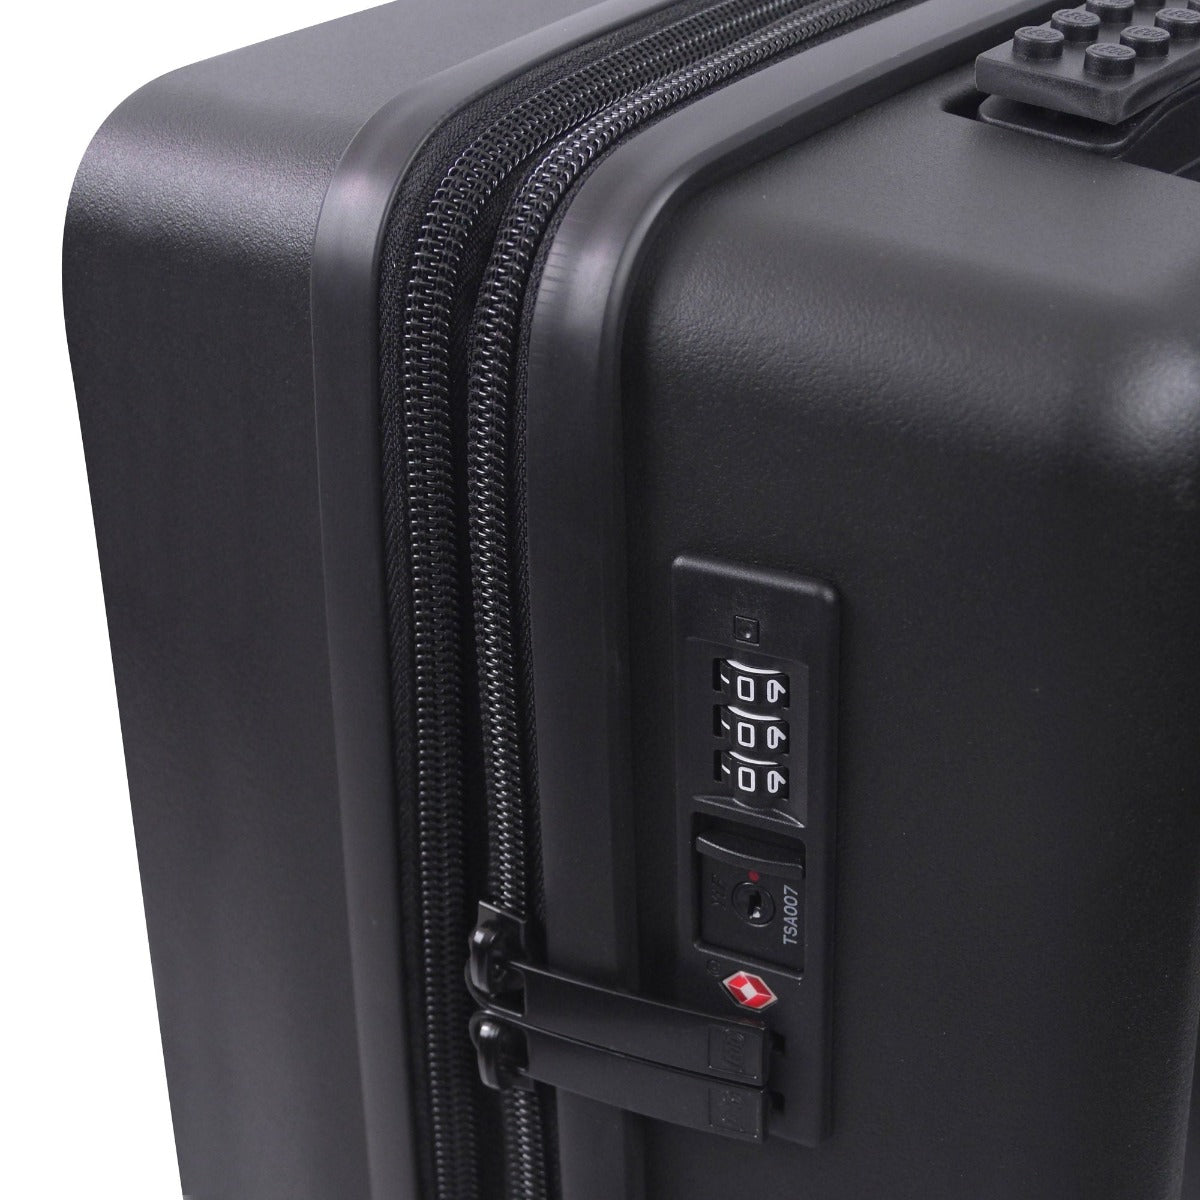 Black Lego Signature Brick 22" carry-on hardshell spinner suitcase for traveling